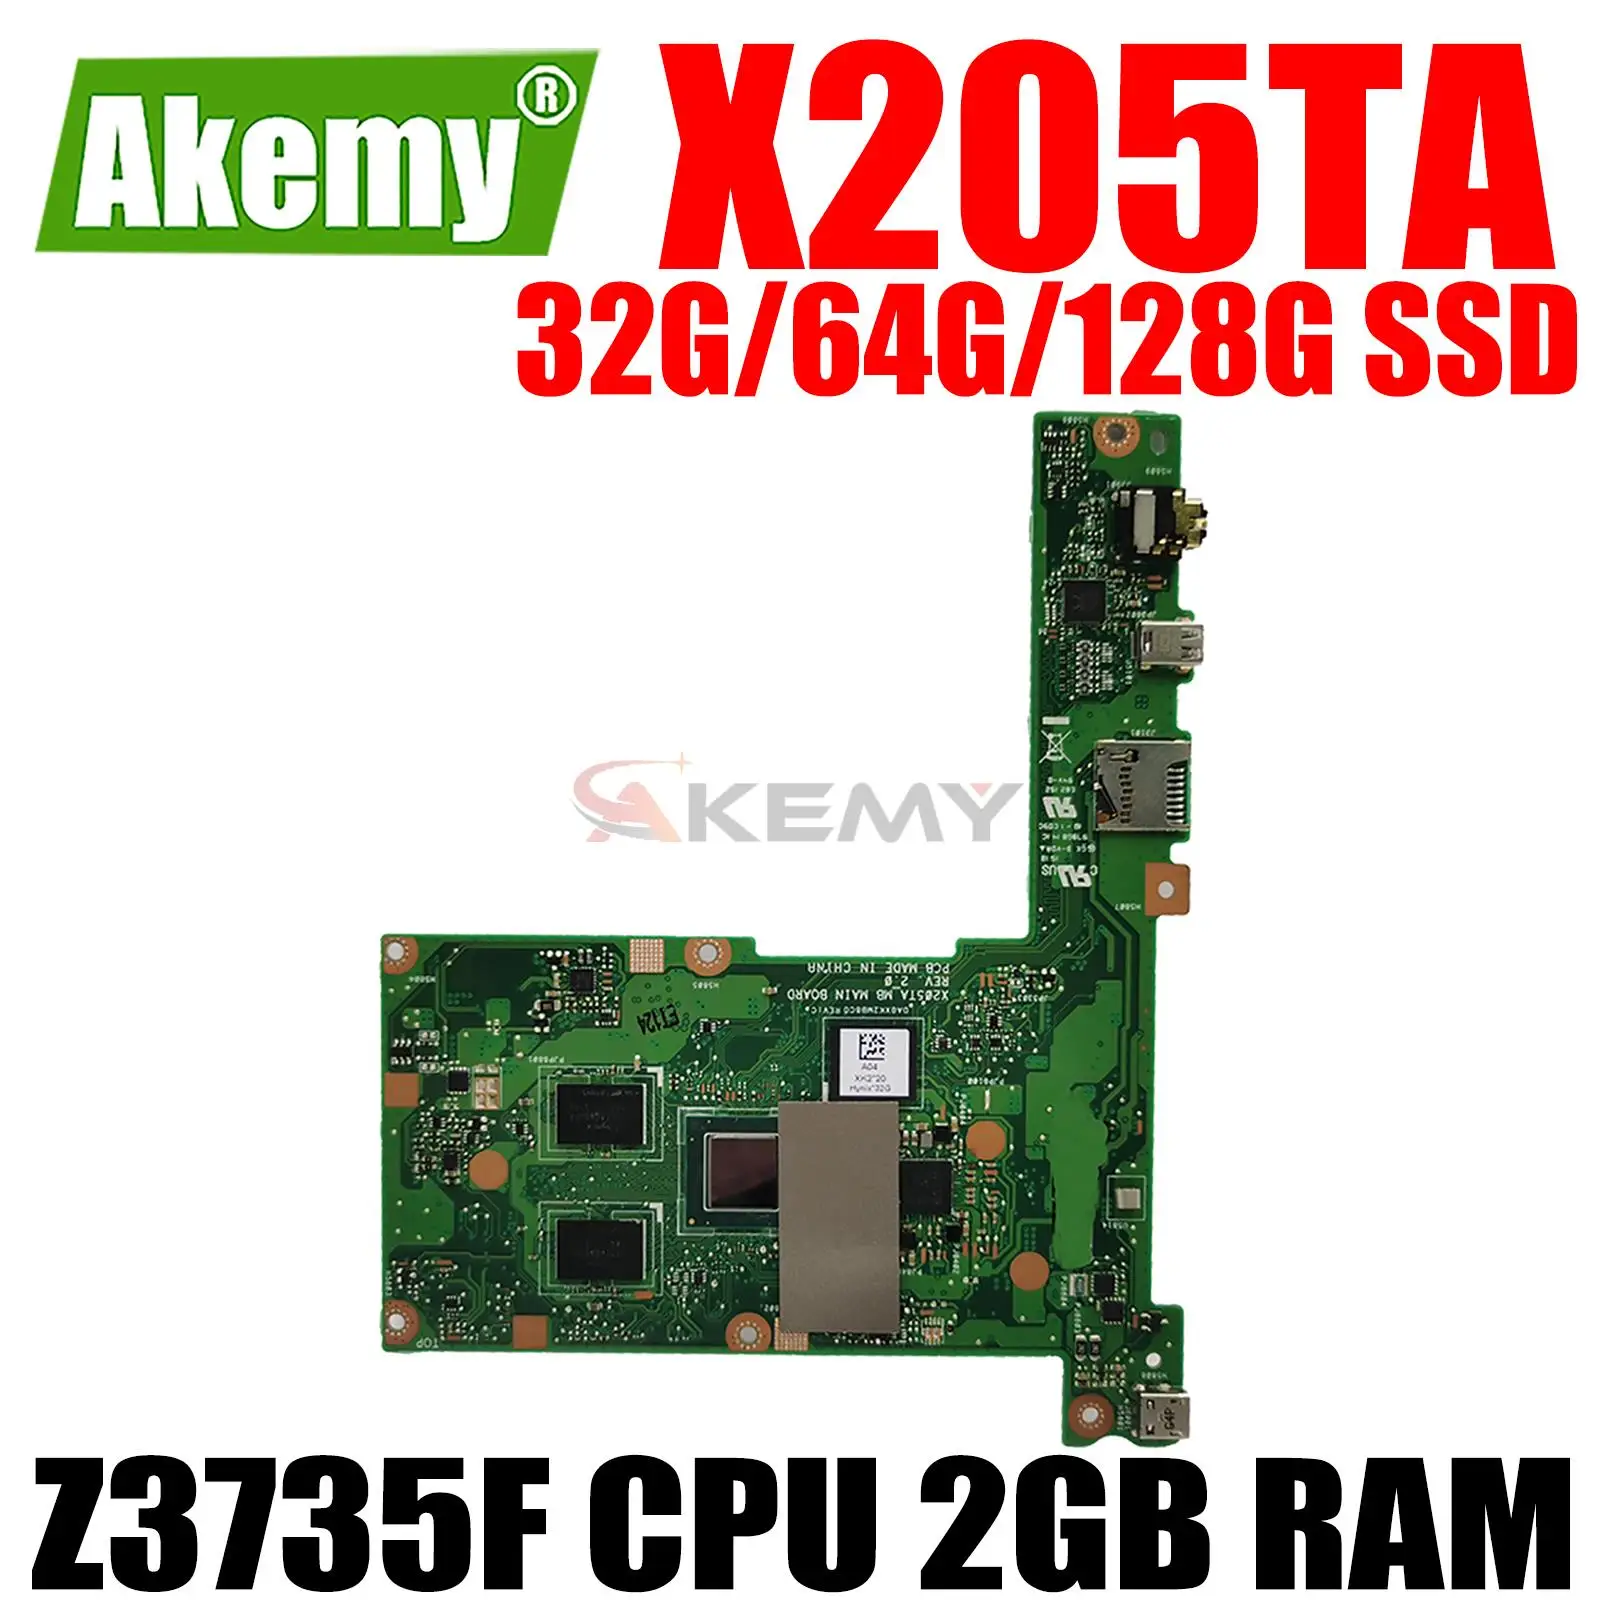 

X205TA Laptop Motherboard for ASUS X205TA X205T Notebook Motherboard Mainboard Z3735F CPU 2GB RAM 32G 64G 128G SSD